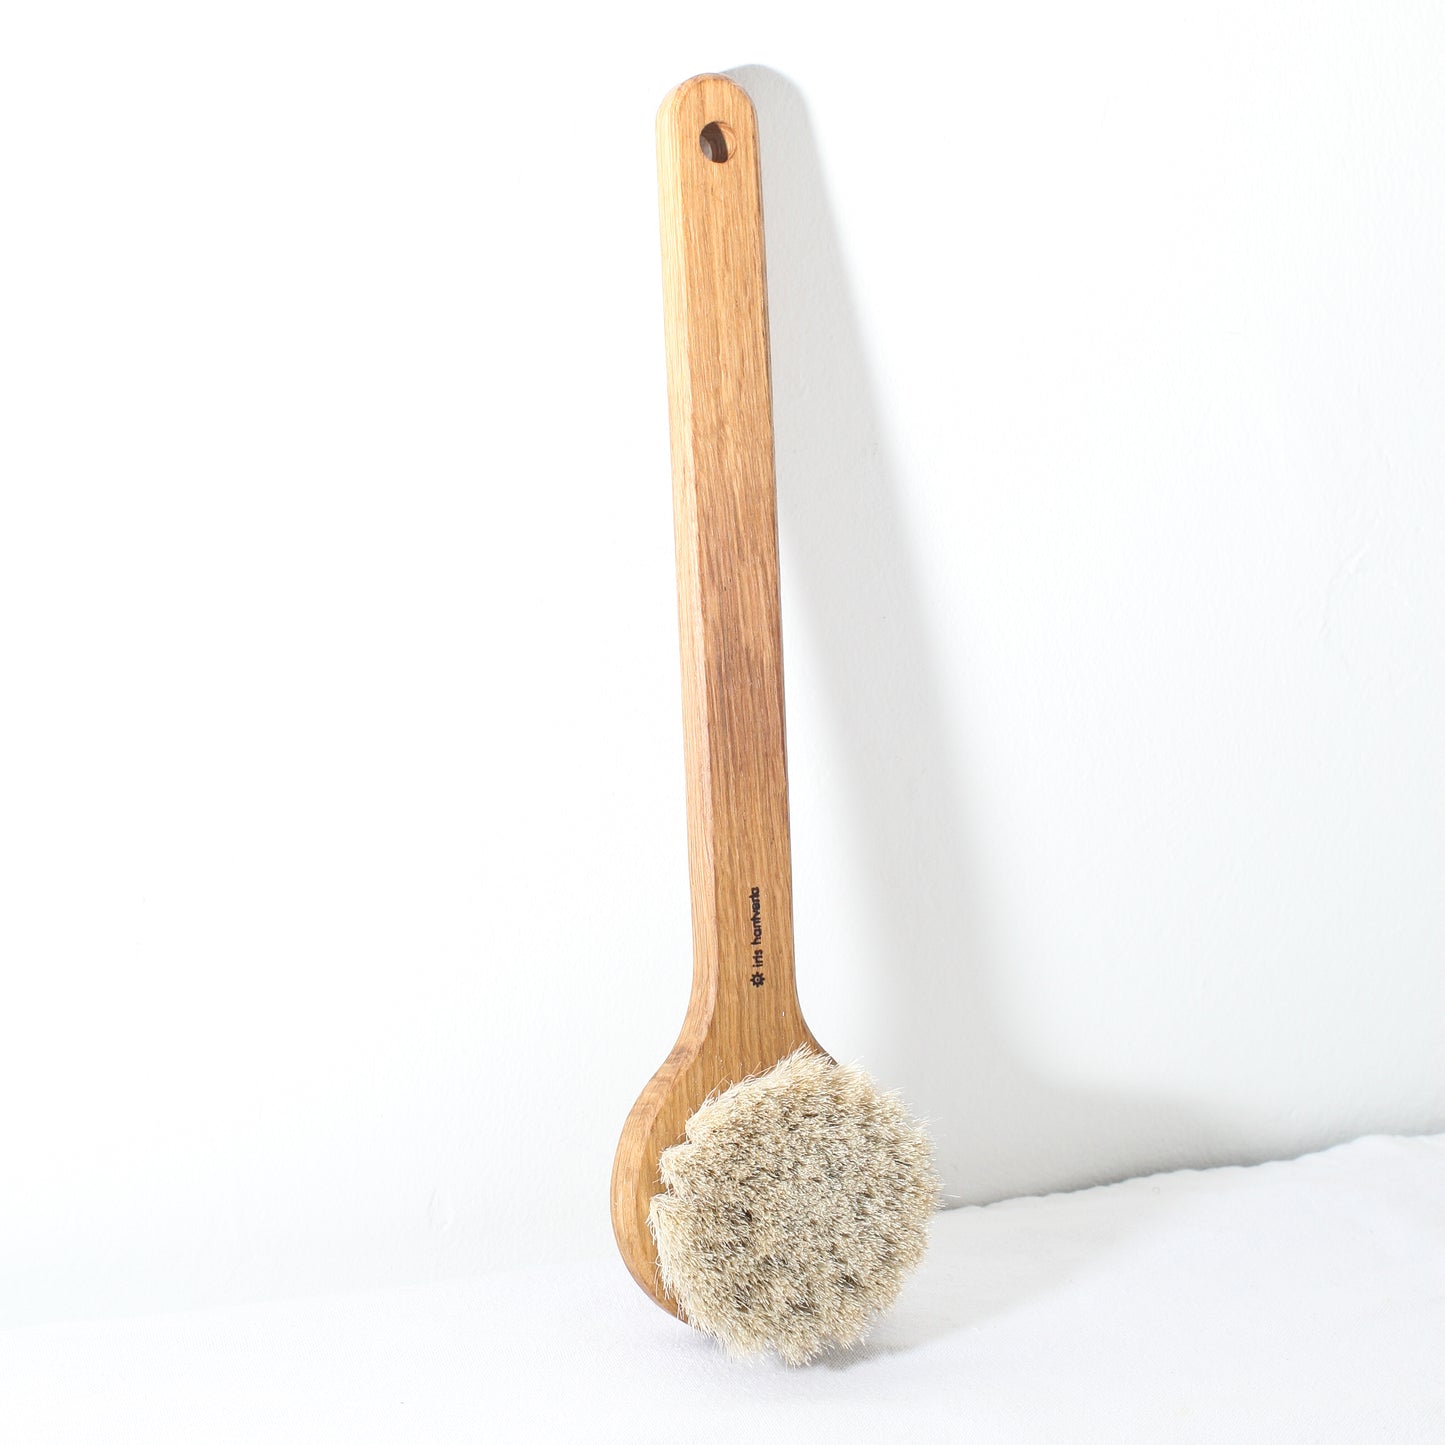 A wooden bath brush with horse hair bristles